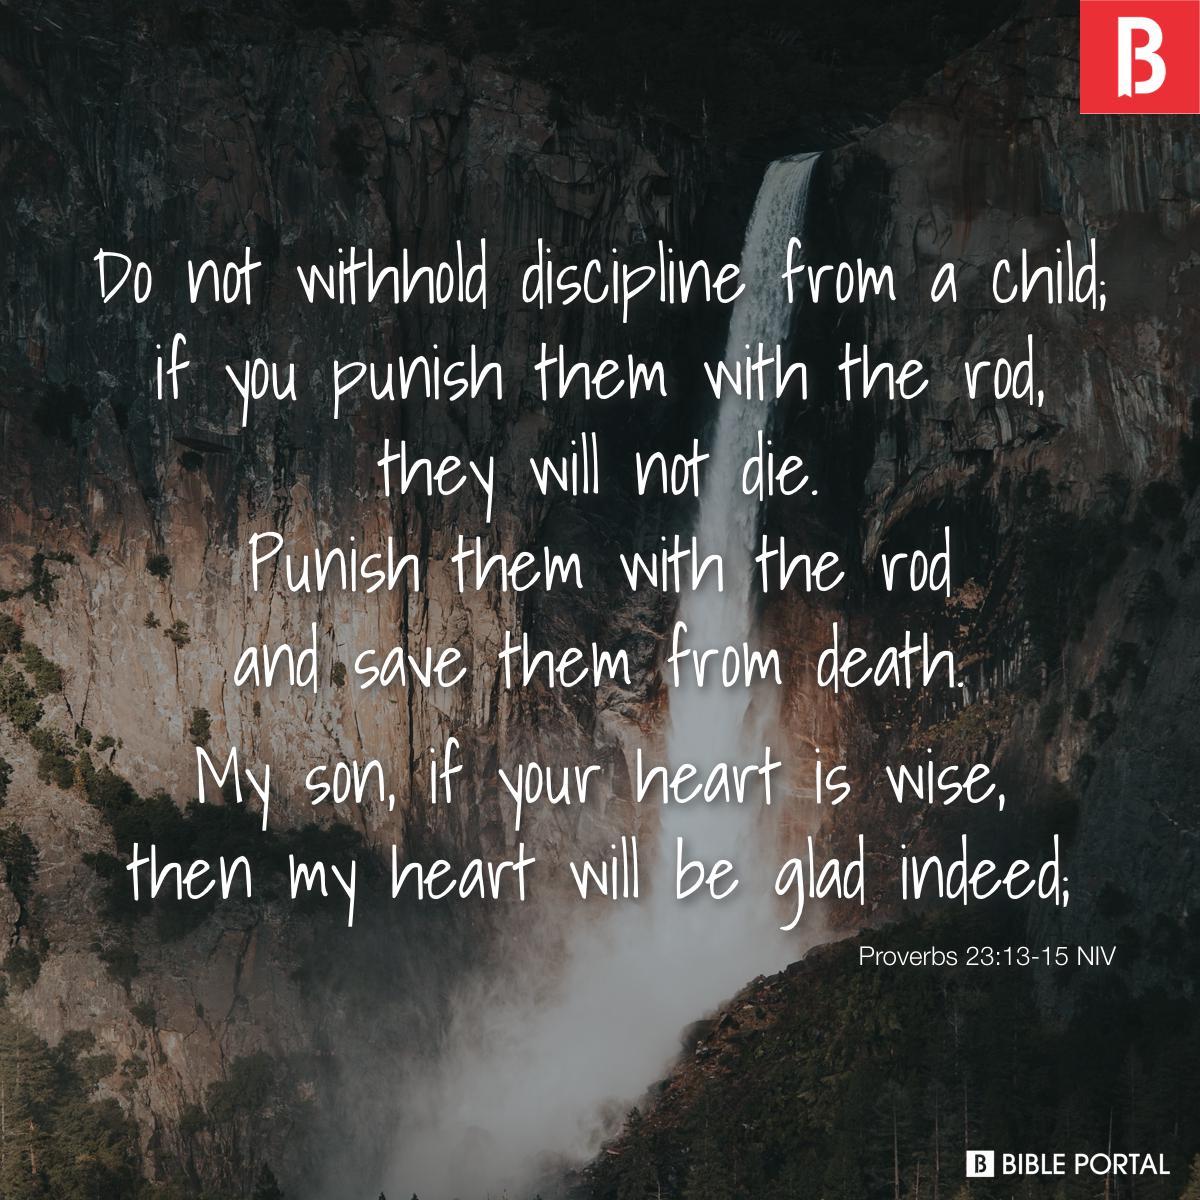 Proverbs 23:13-15 NIV